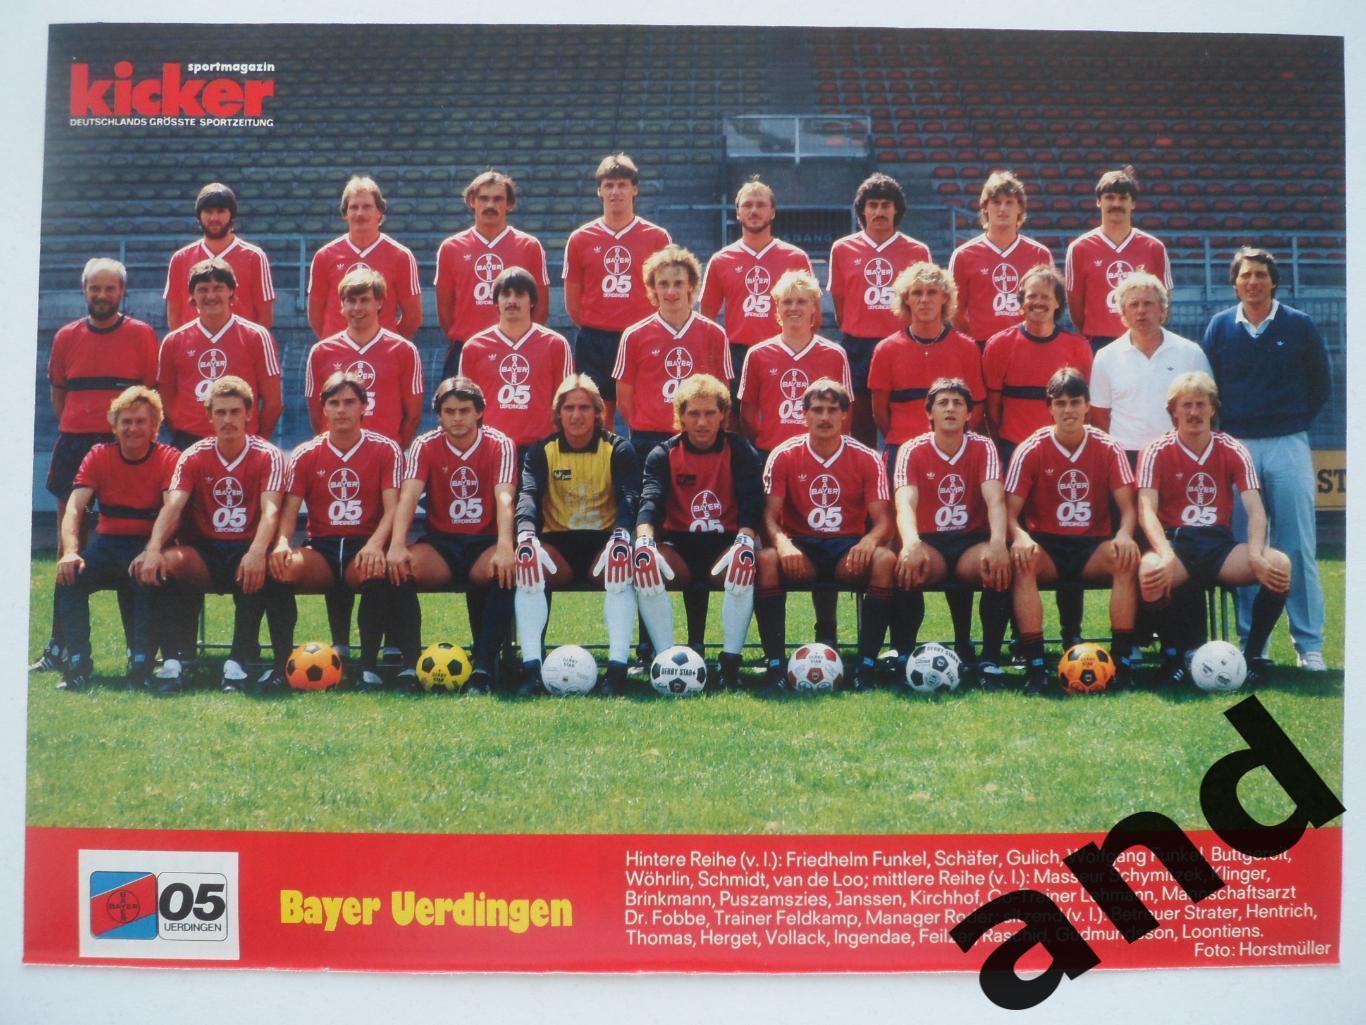 постер Байер Юрдинген 1984 - Kicker